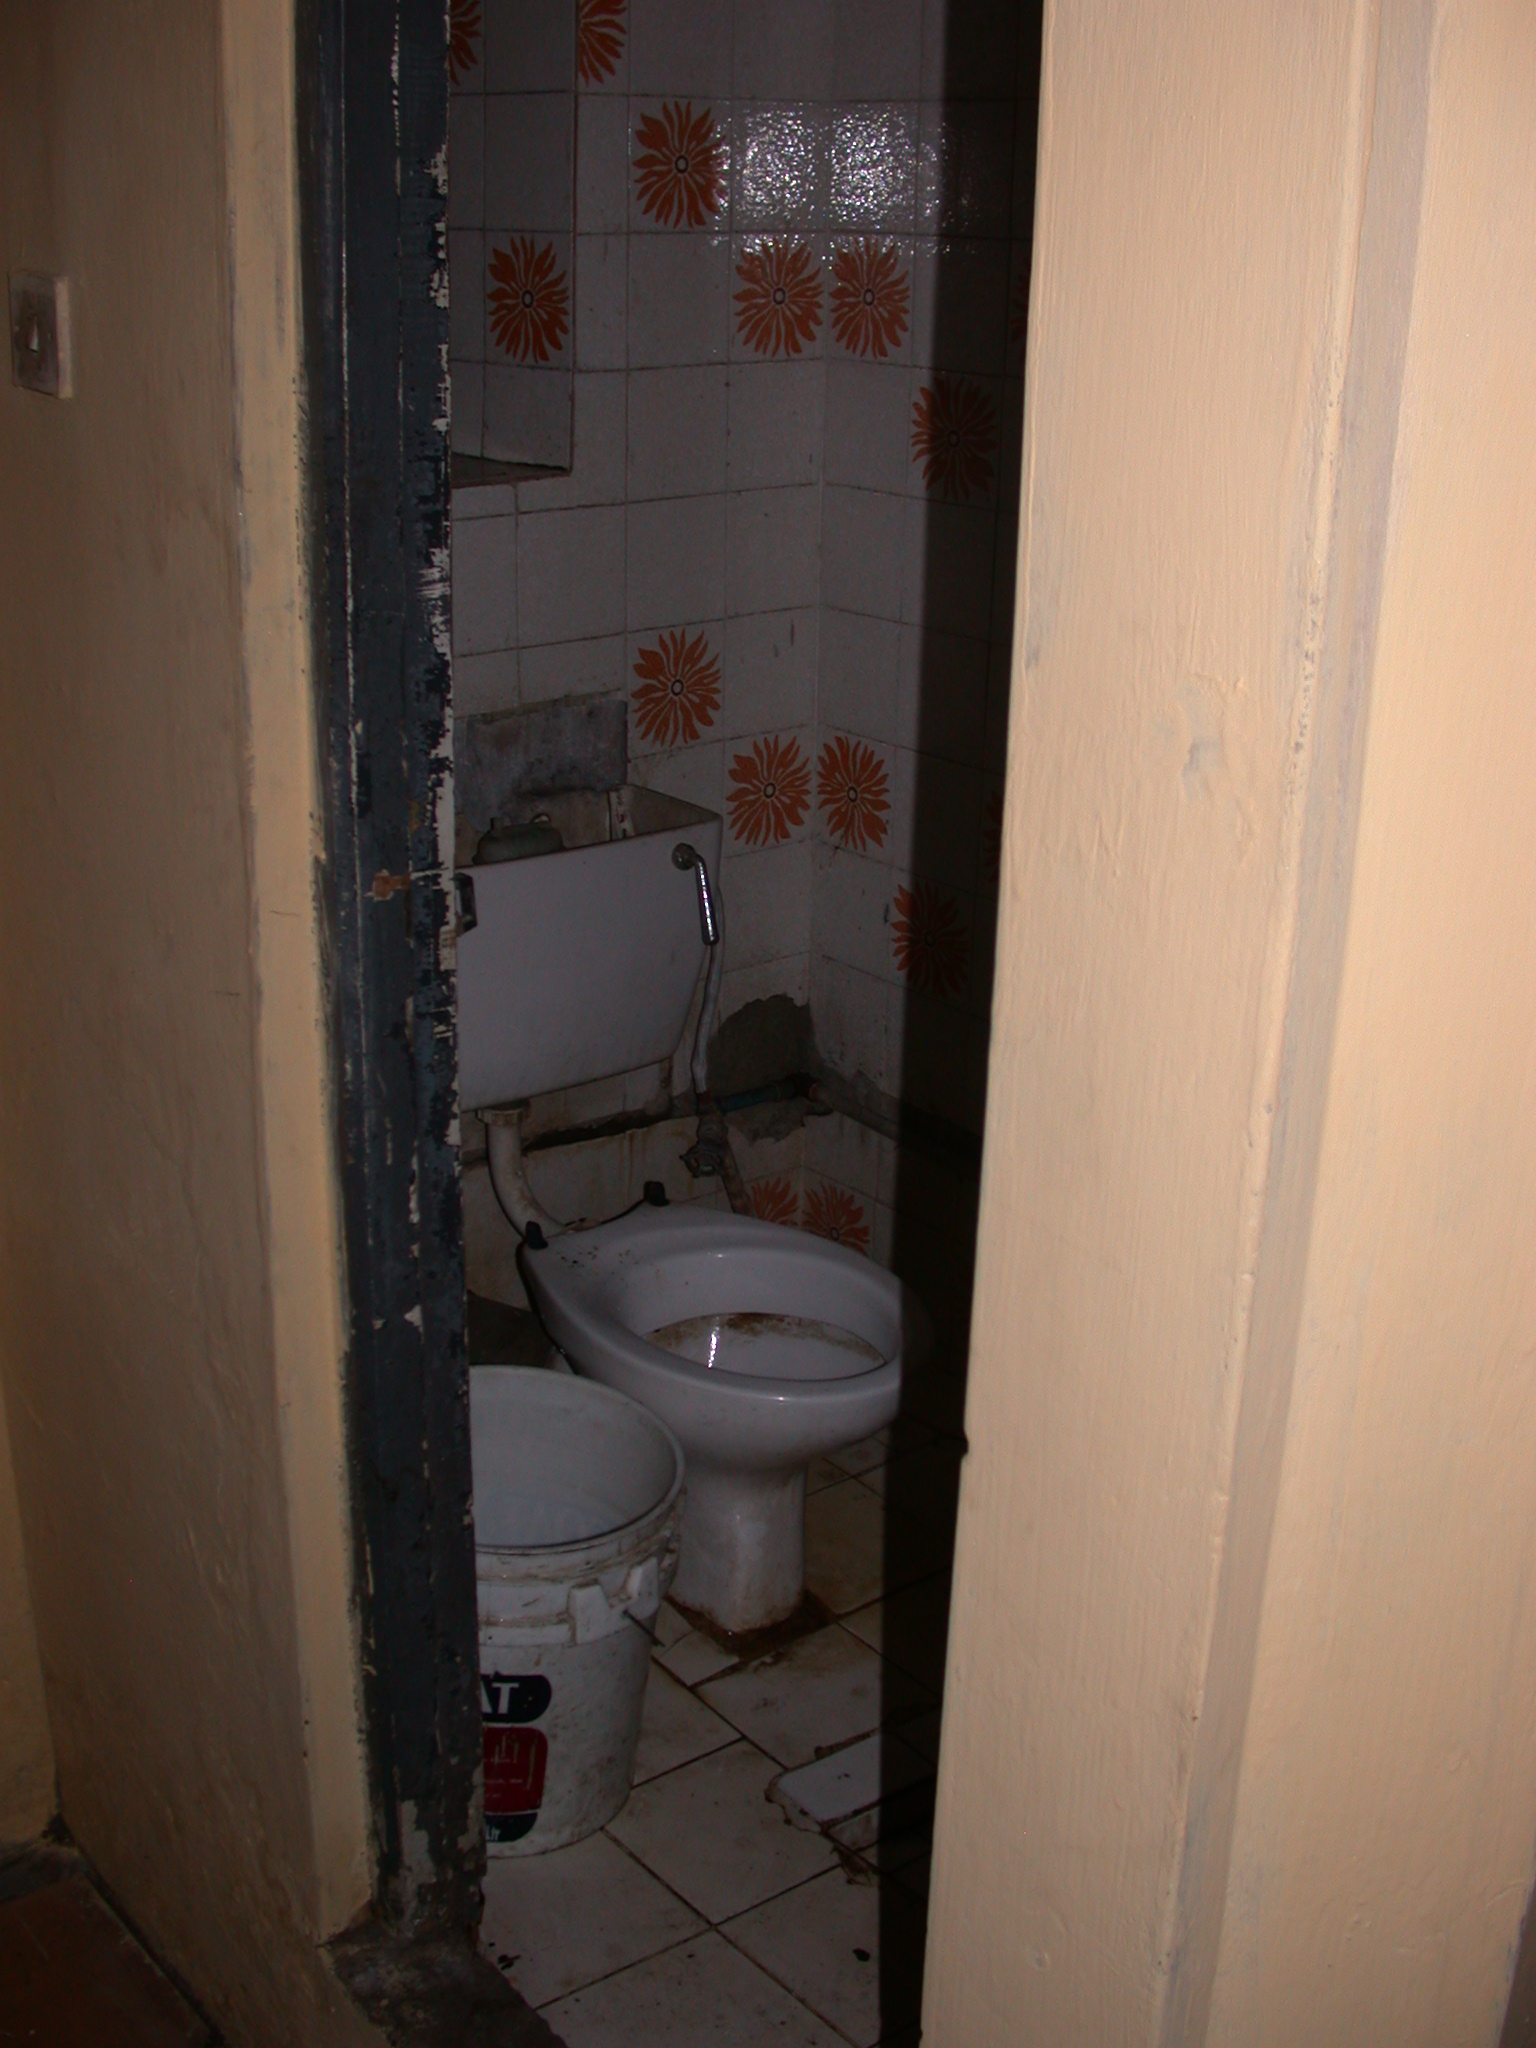 Bathroom of Hotel Room, Ritz Hotel, Lagos, Nigeria